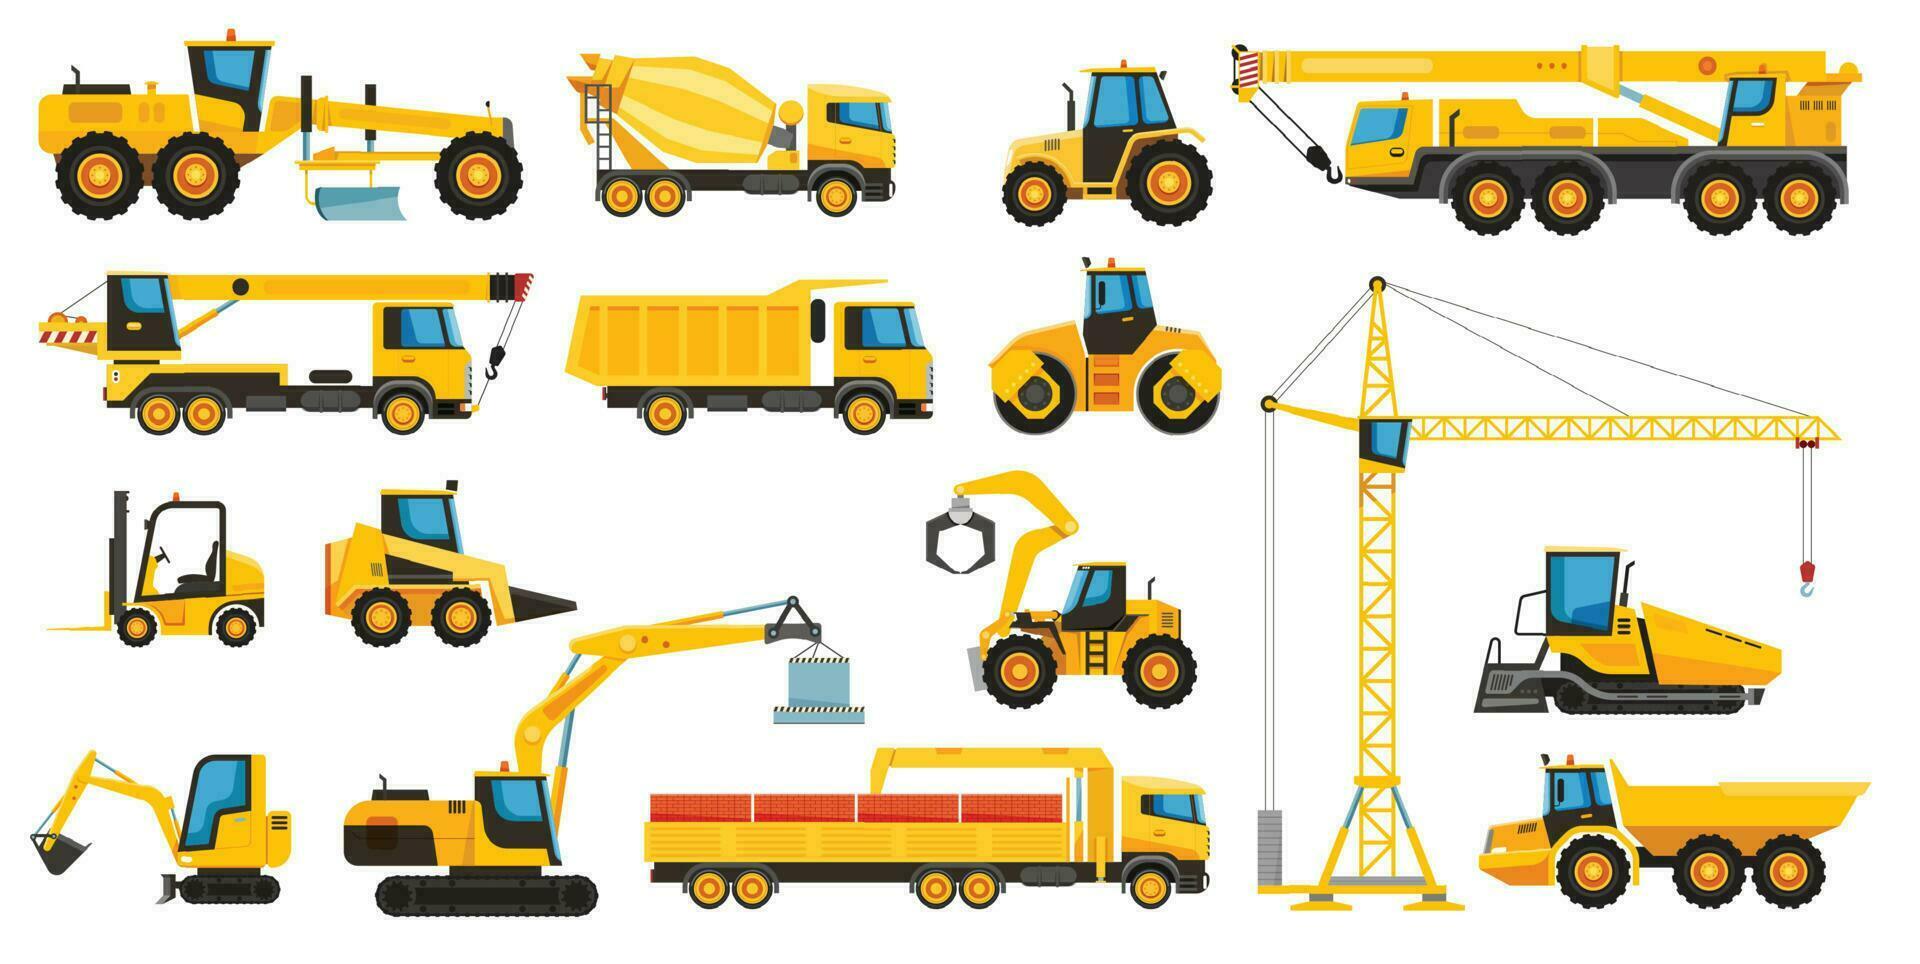 Construction heavy machinery, building equipment and vehicles. Forklift, excavator, crane, tractor, bulldozer, excavator vector set